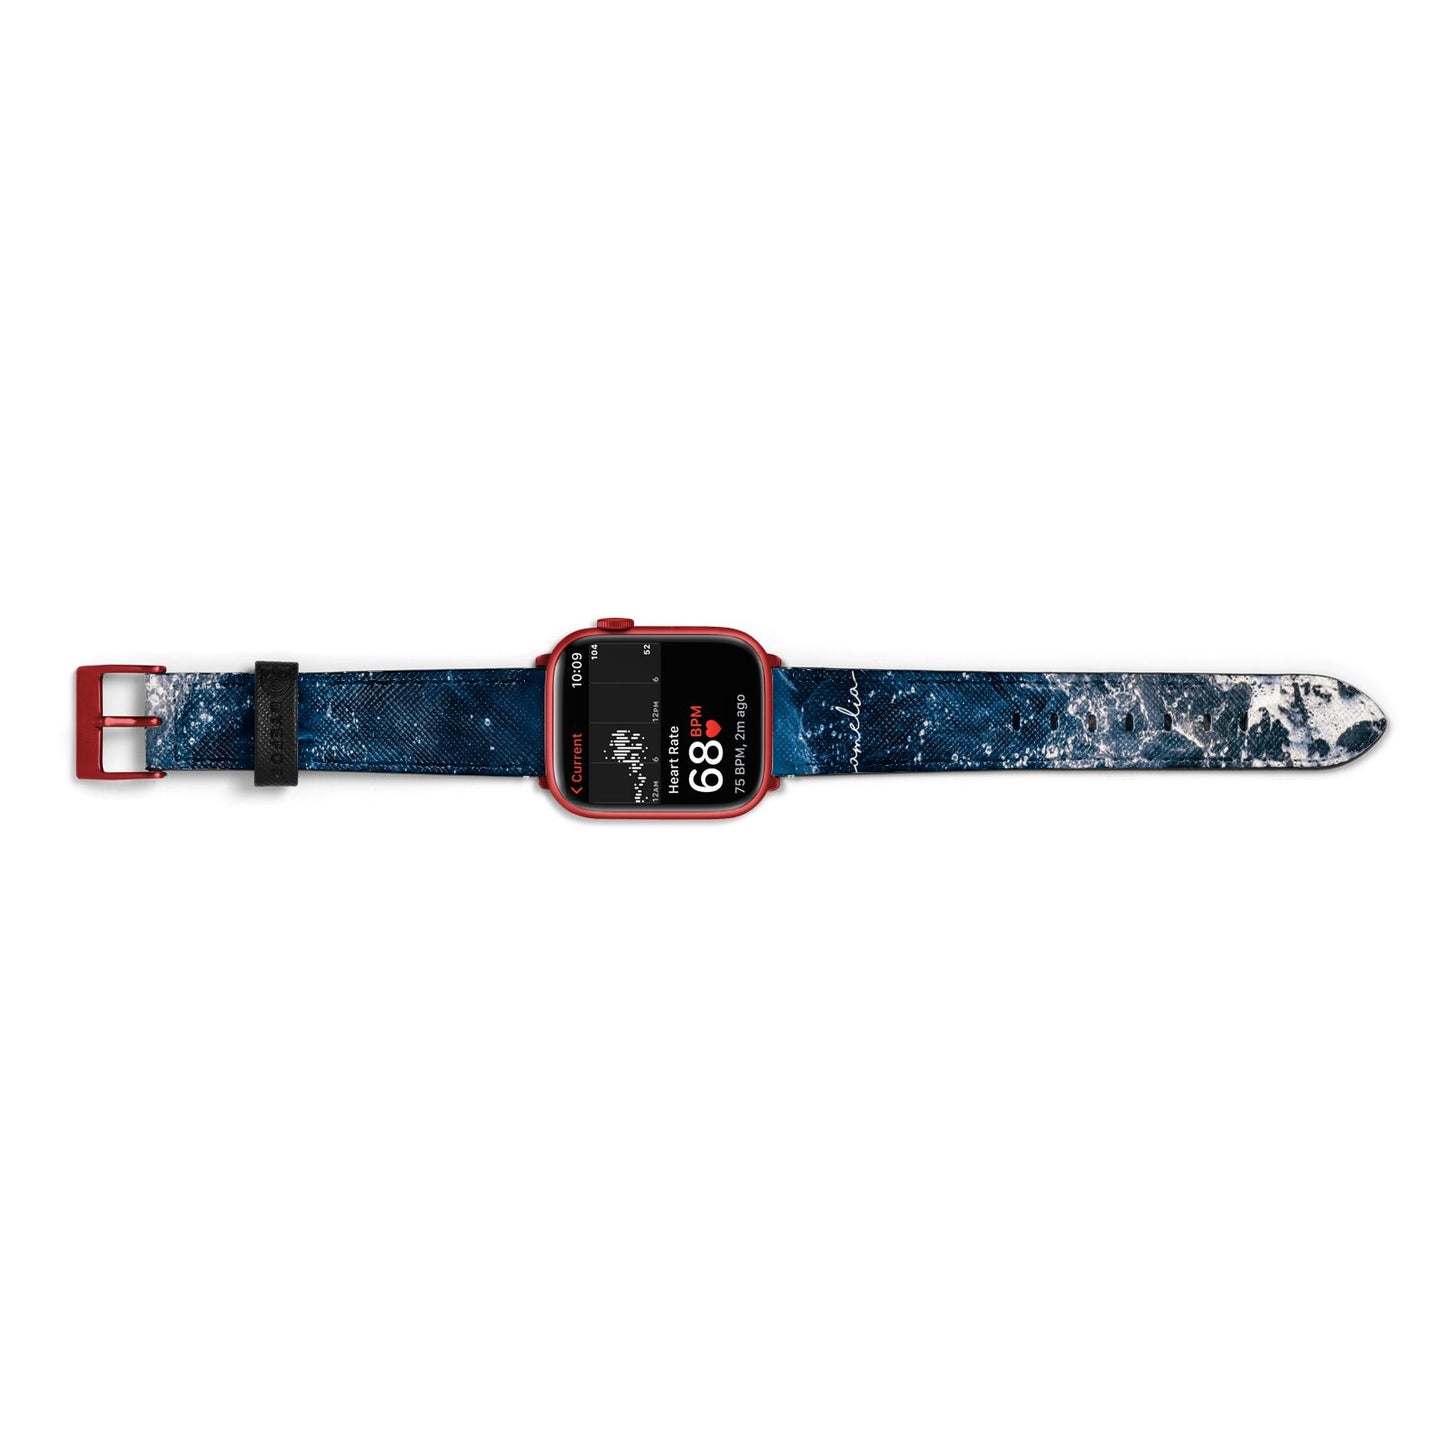 Custom Sea Apple Watch Strap Size 38mm Landscape Image Red Hardware